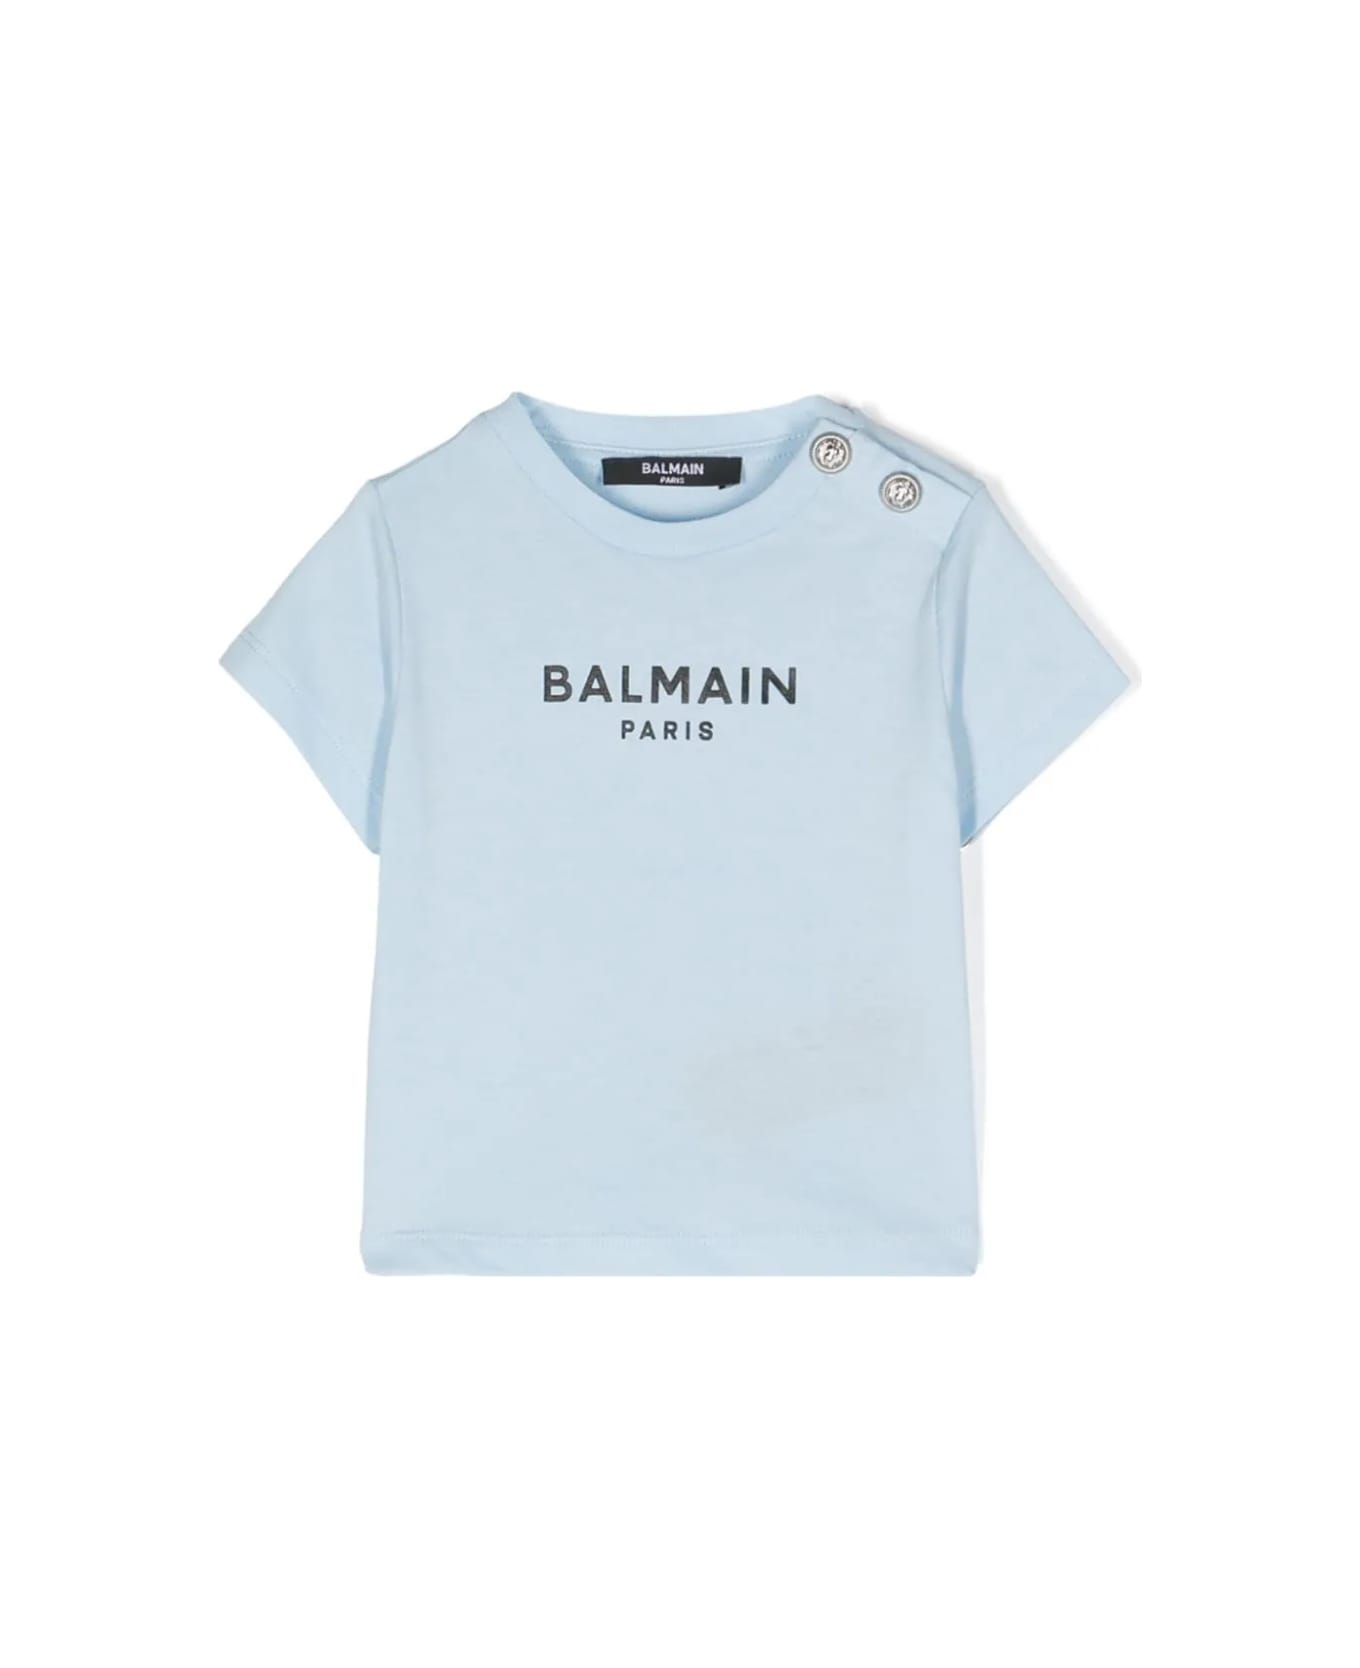 Balmain T-shirt With Print - Light blue